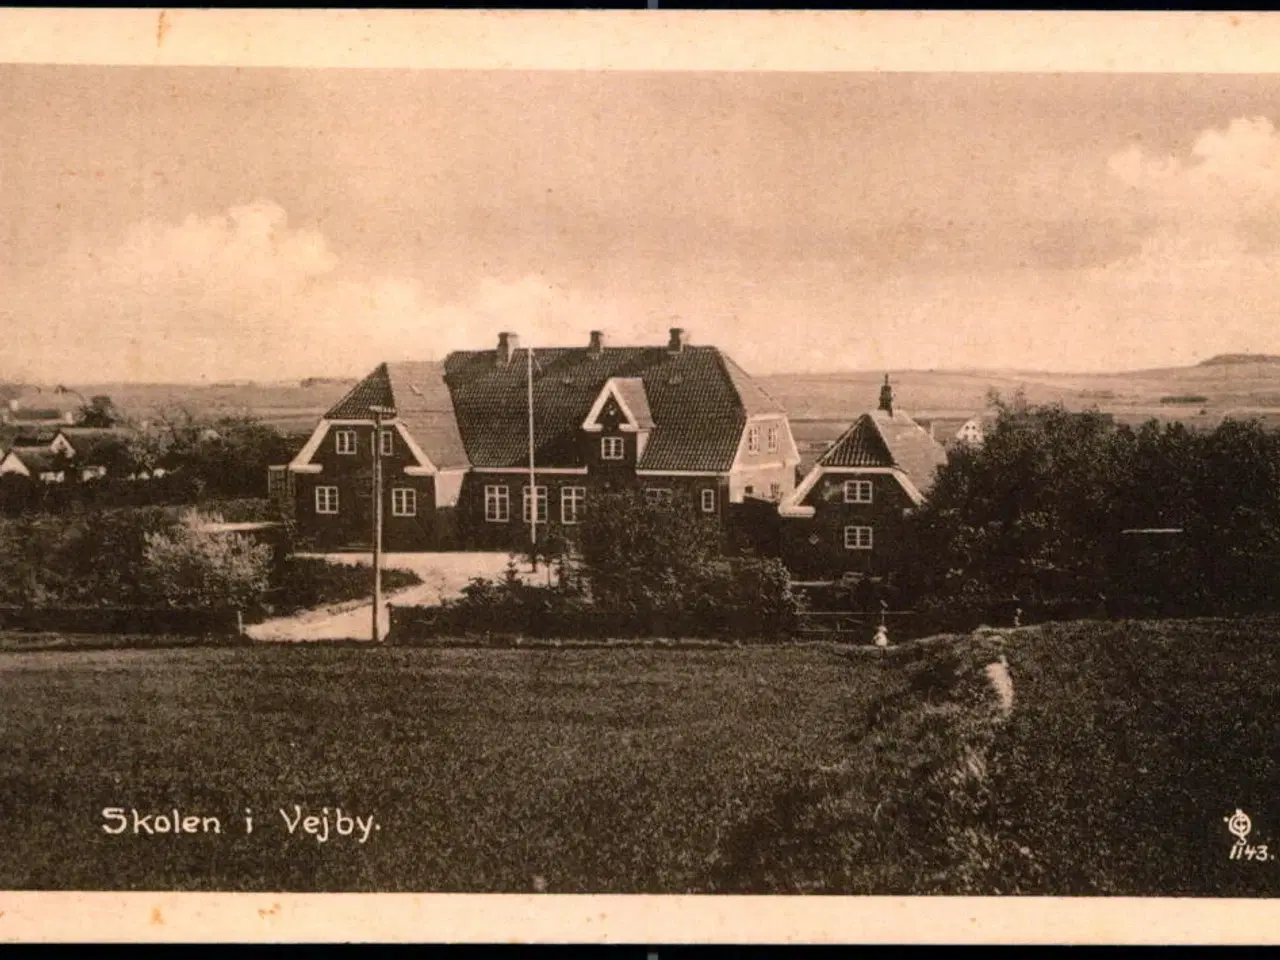 Billede 1 - Skolen i Vejby - Chr. Olsen 1143